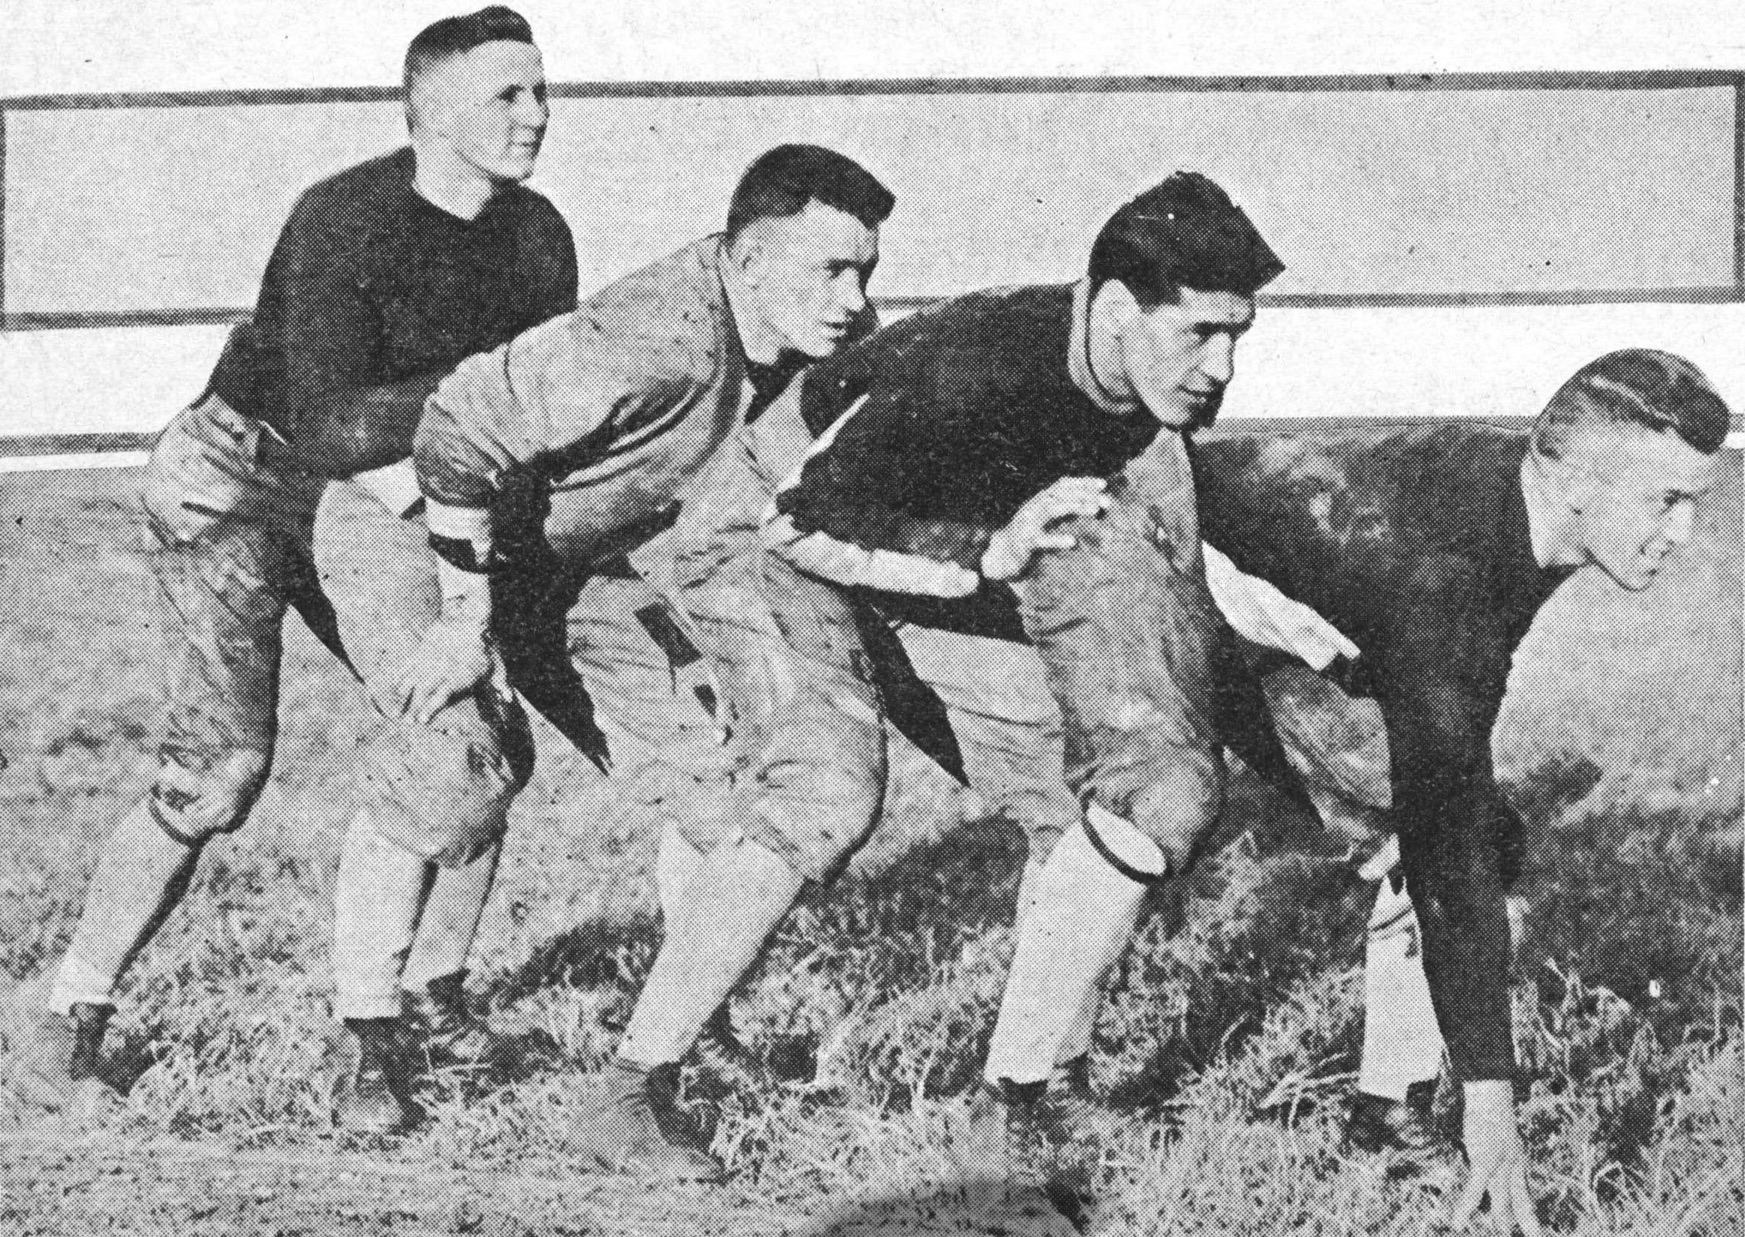 Georgia Tech's backfield players pose in 1917